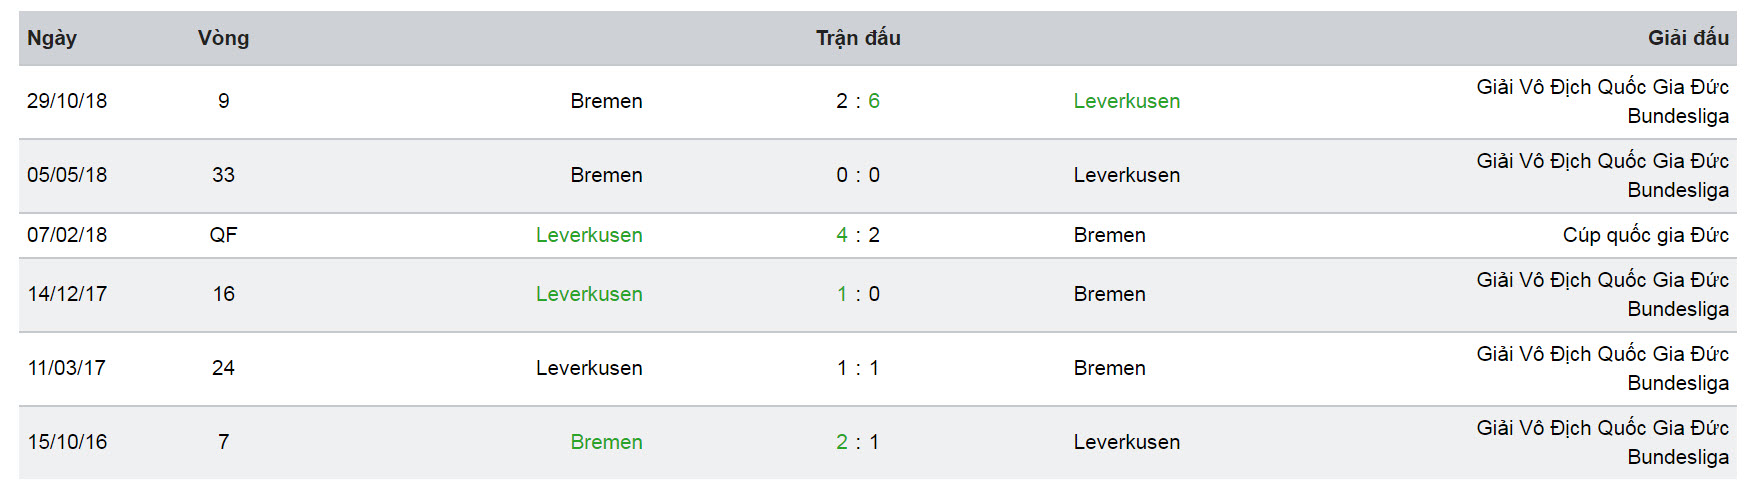 Nhận định, soi kèo trận B.Leverkusen vs Wer.Bremen 17/03/19 VĐQG Đức 5